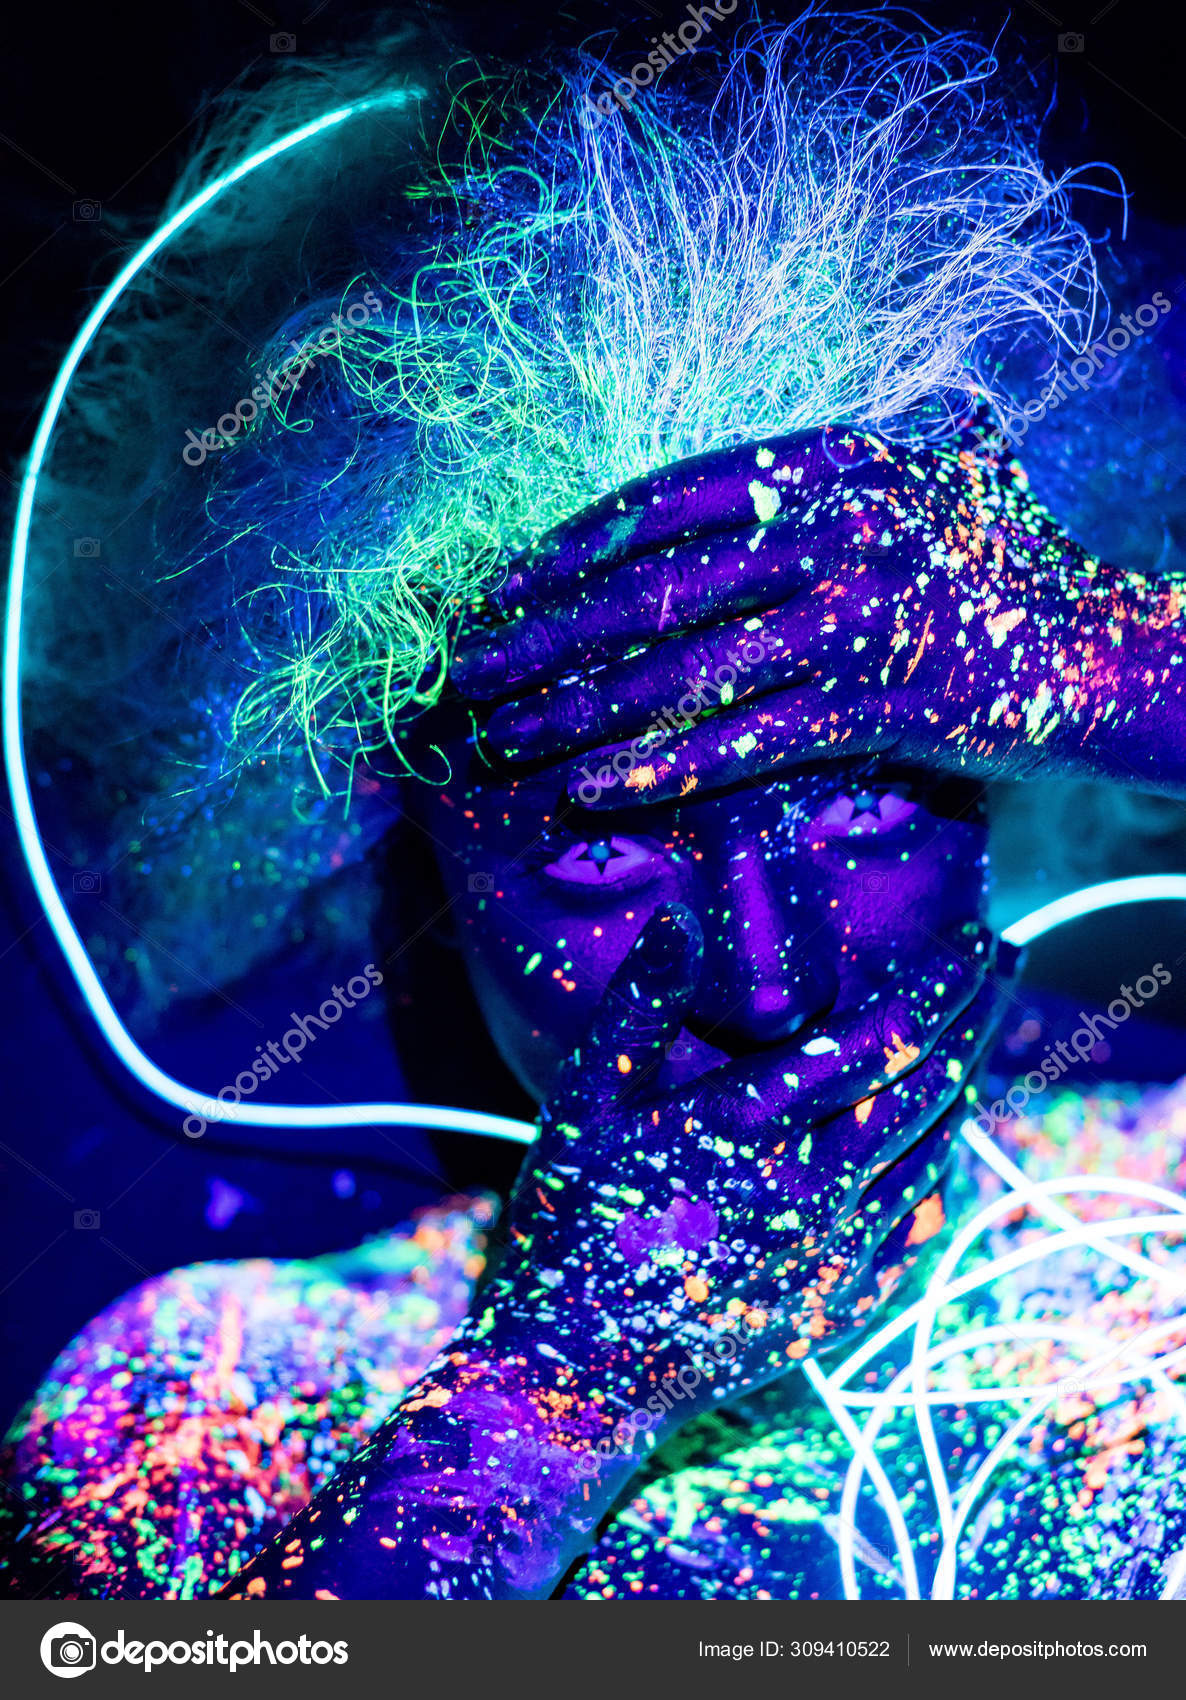 Body Art UV Fluorescent Paint -   Fluorescent paint, Body art, Painting